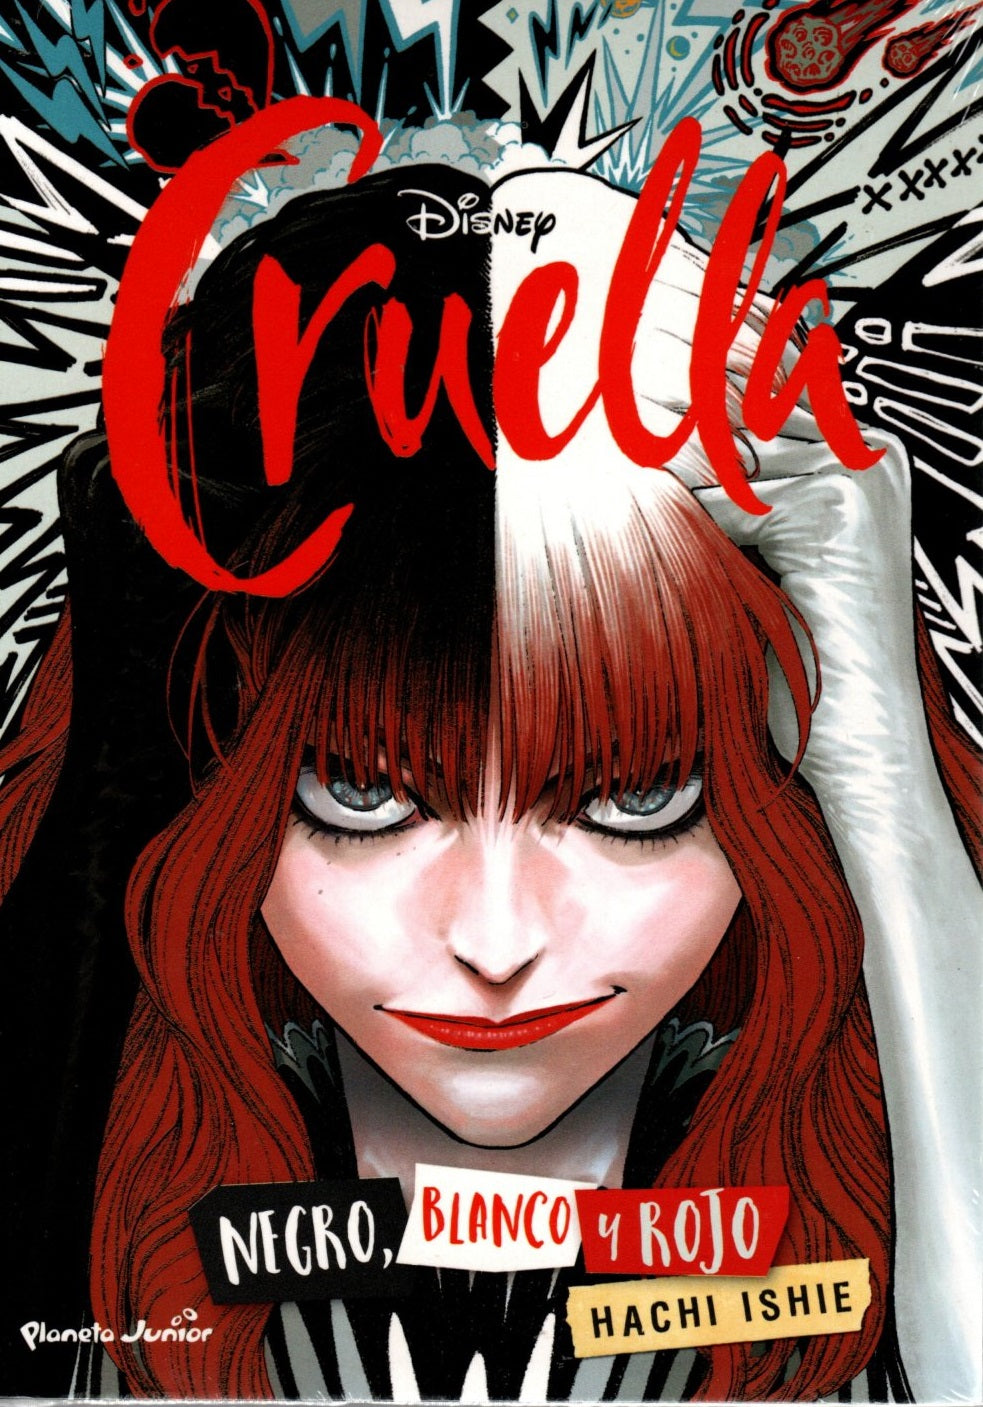 Libro Disney- Cruella Manga (Negro, blanco y rojo)